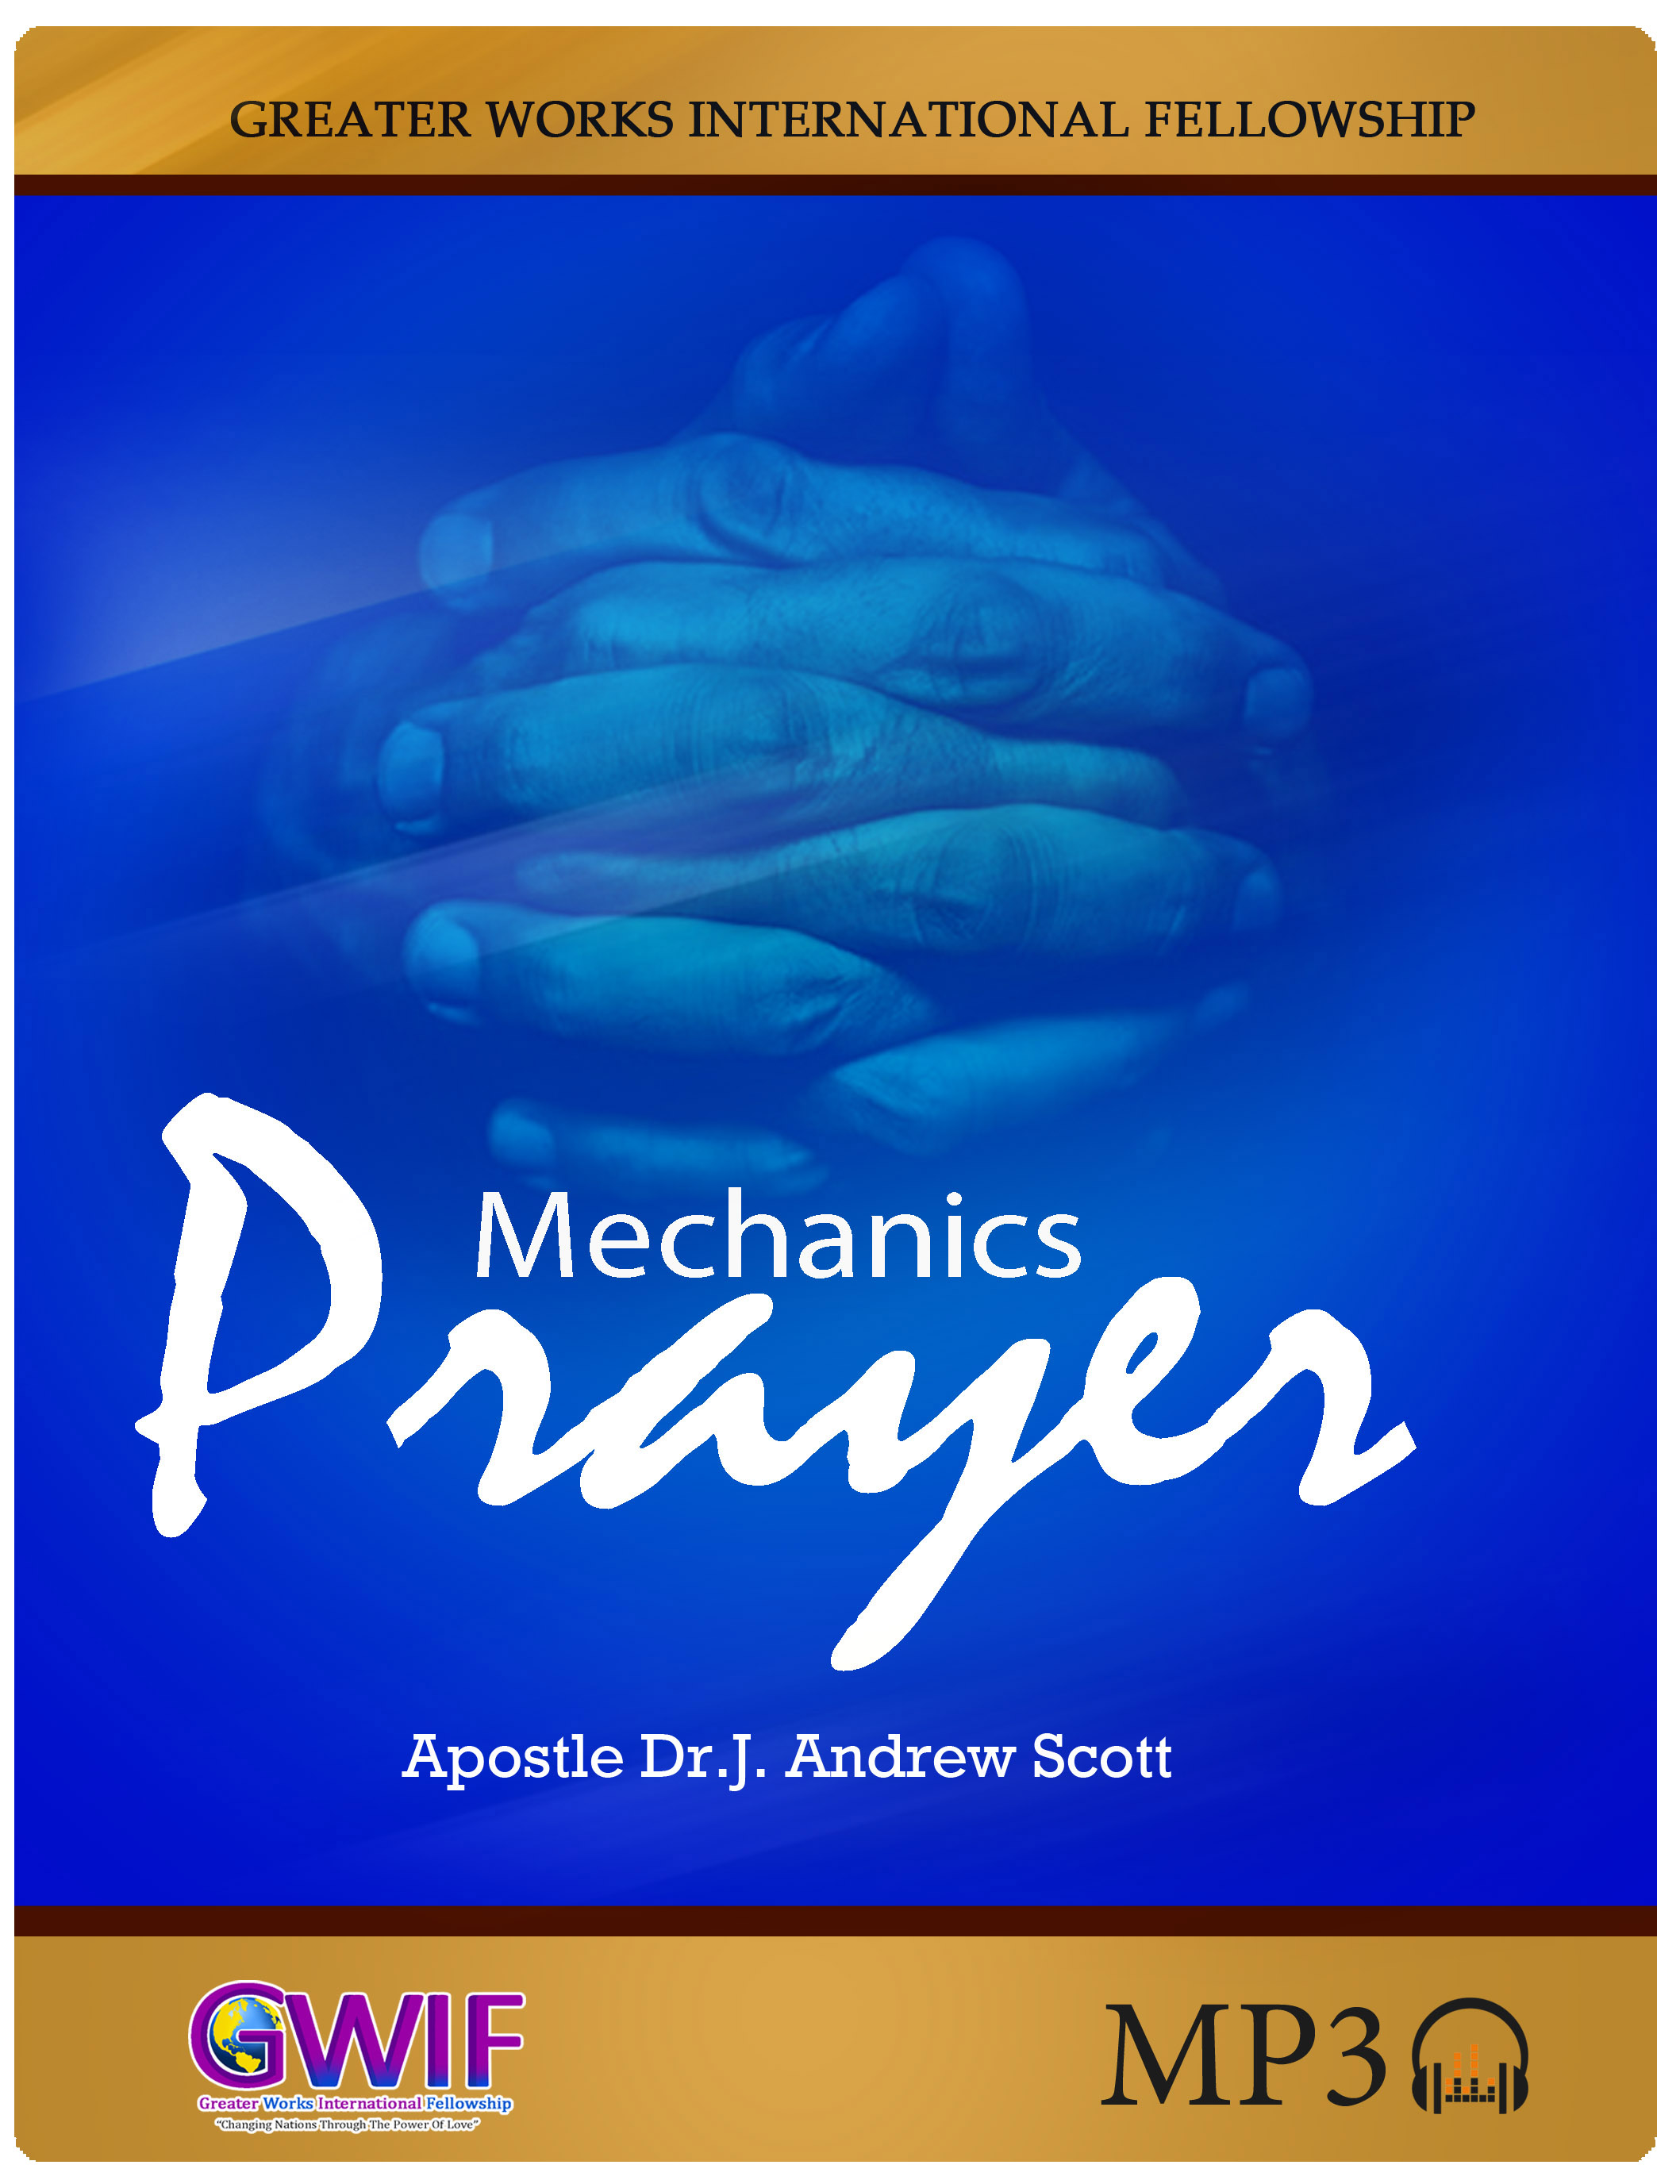 Mechanics of Prayer